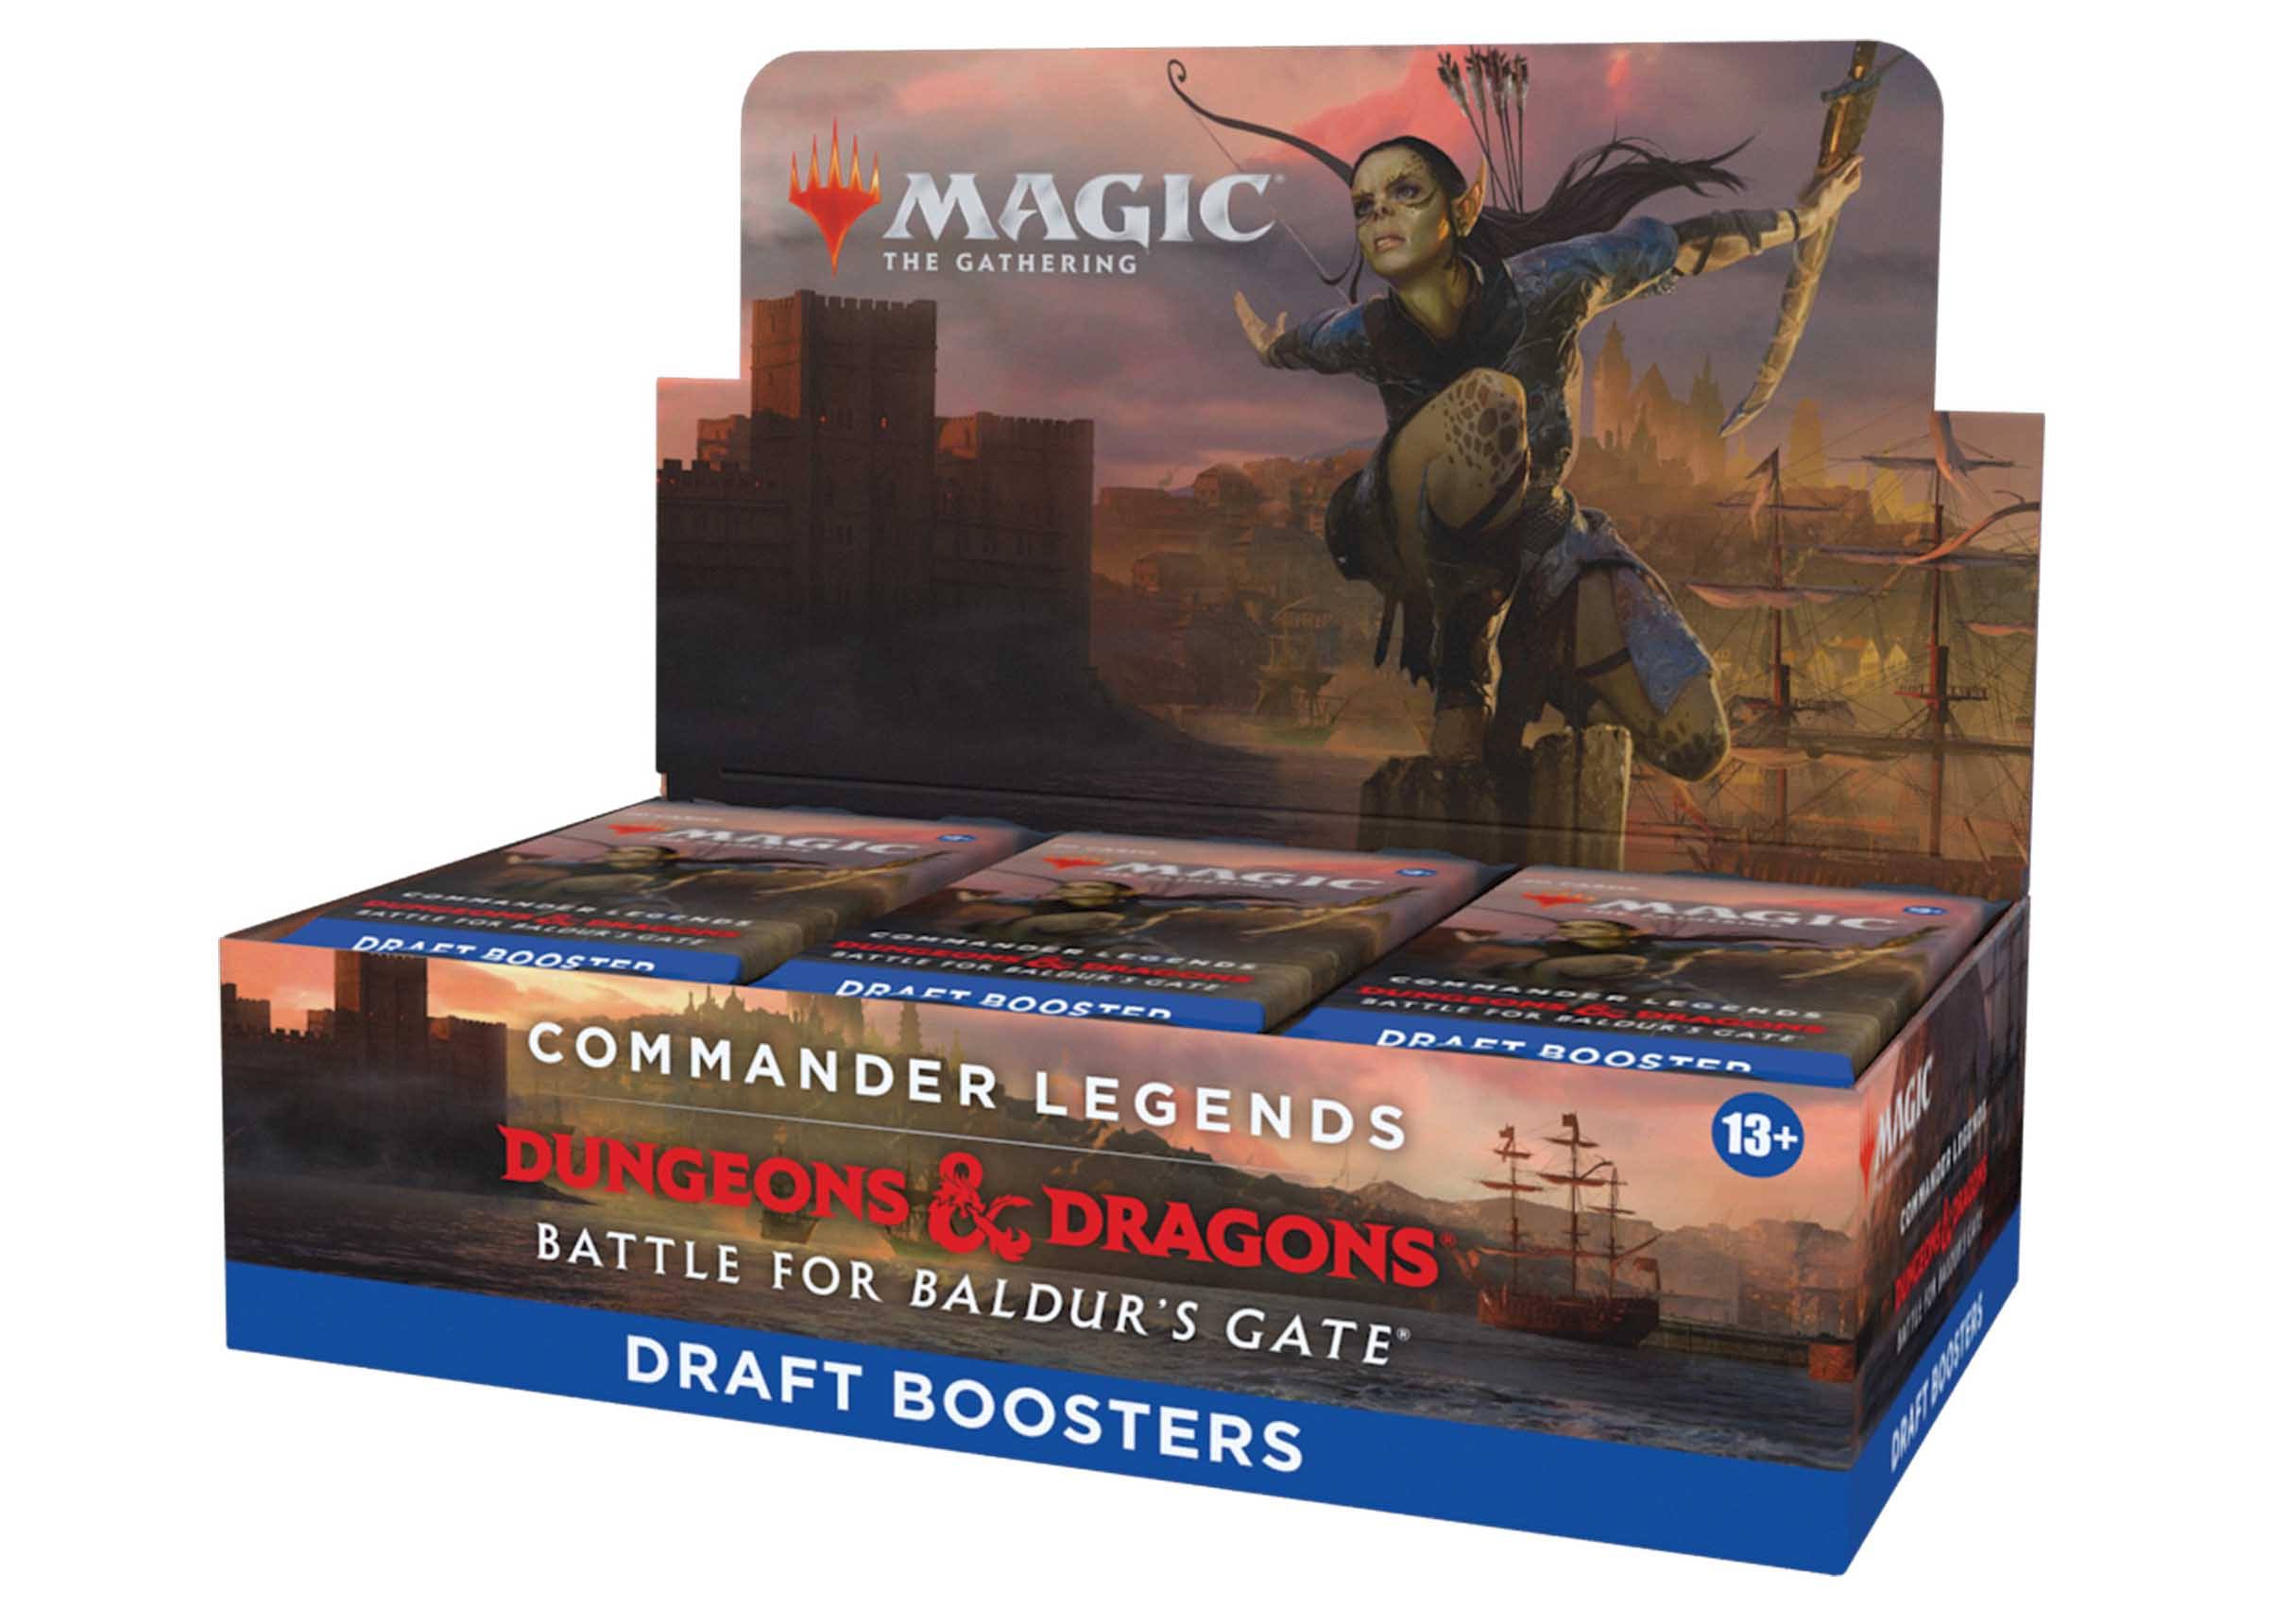 Magic The Gathering - Commander Legends Battle for Baldur's Gate - Draft Booster Box